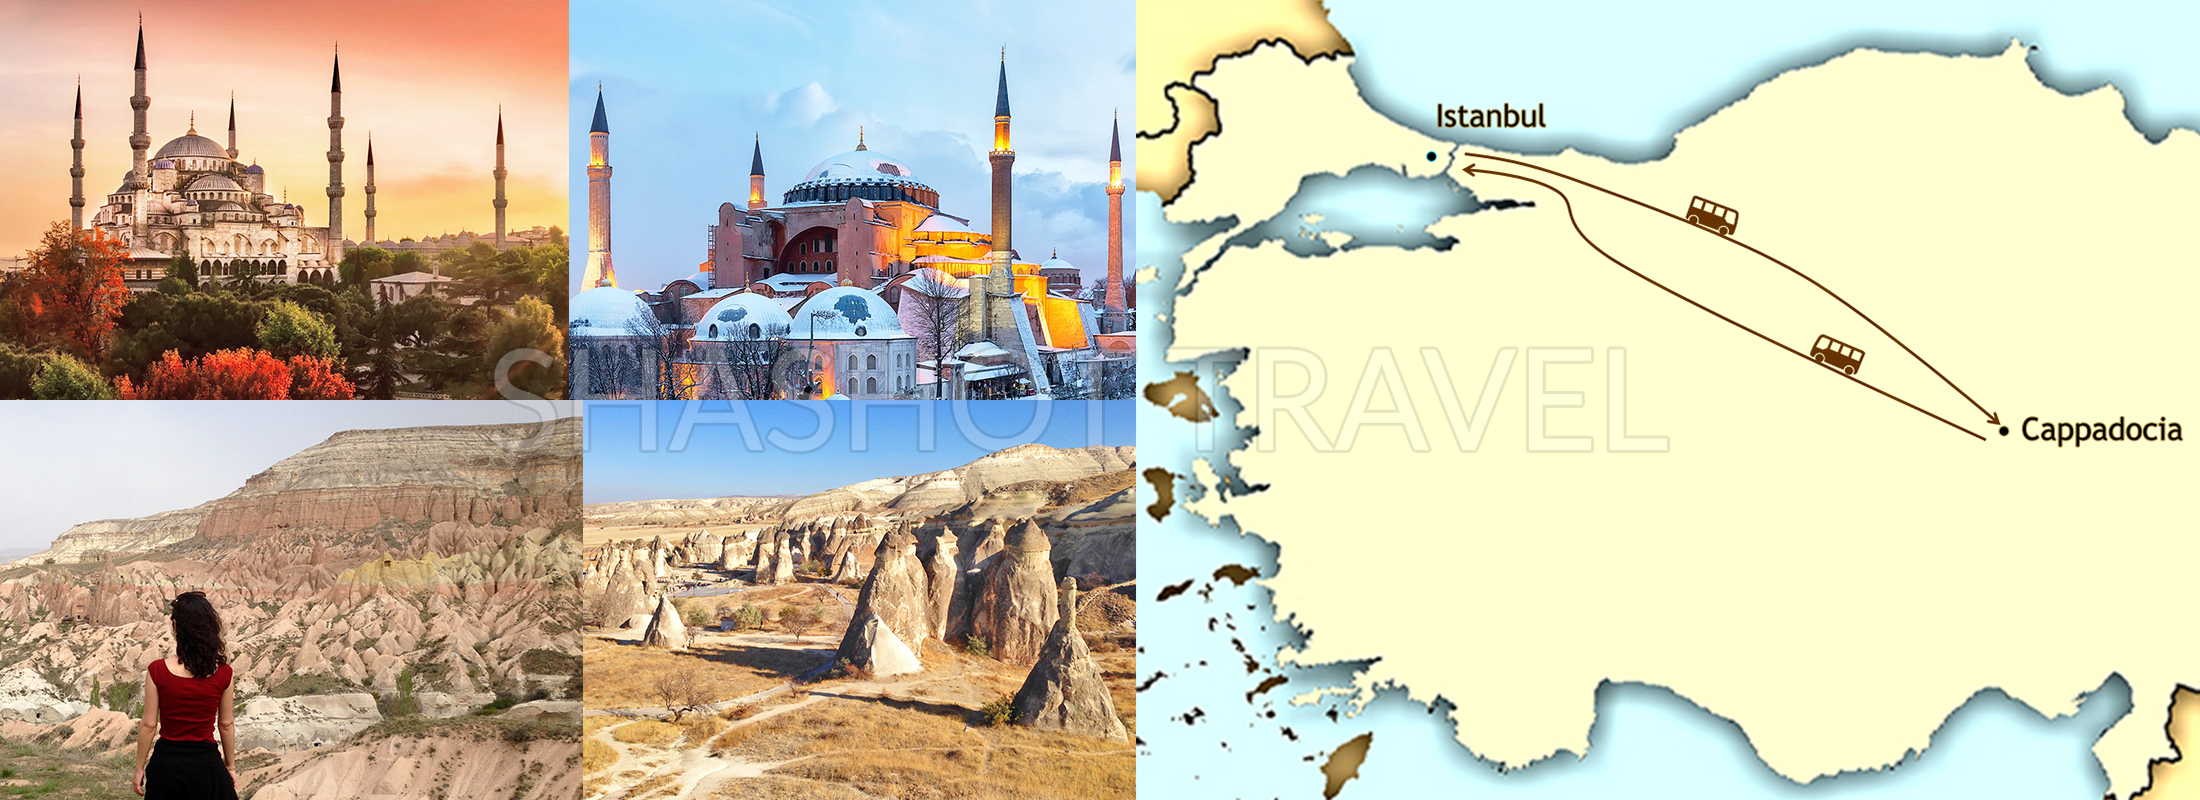 5-days-package-tours-istanbul-cappadocia-by-bus-shashot-travel-turkiye-map